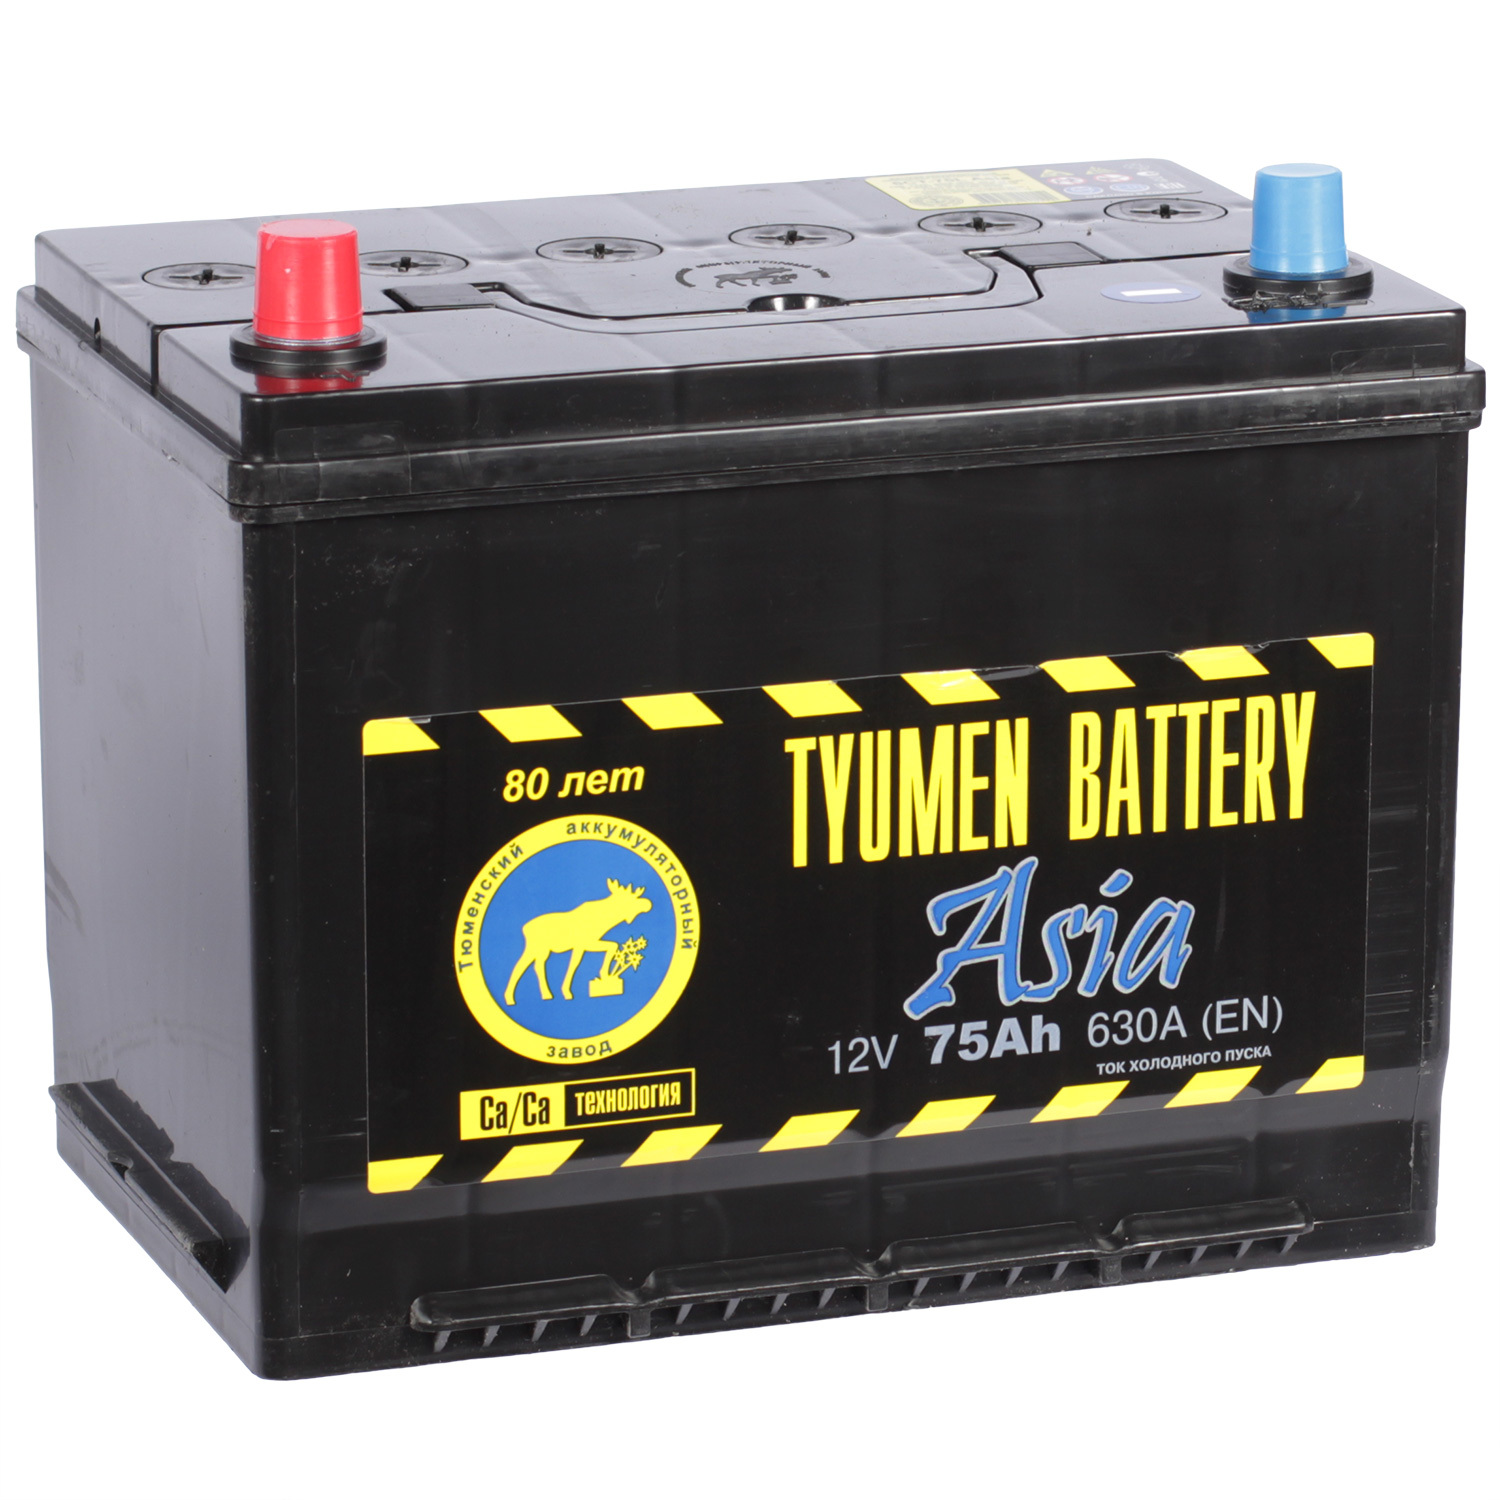 Tyumen Battery Автомобильный аккумулятор Tyumen Battery Asia 75 Ач прямая полярность D26R tyumen battery автомобильный аккумулятор tyumen battery standard 55 ач прямая полярность l2